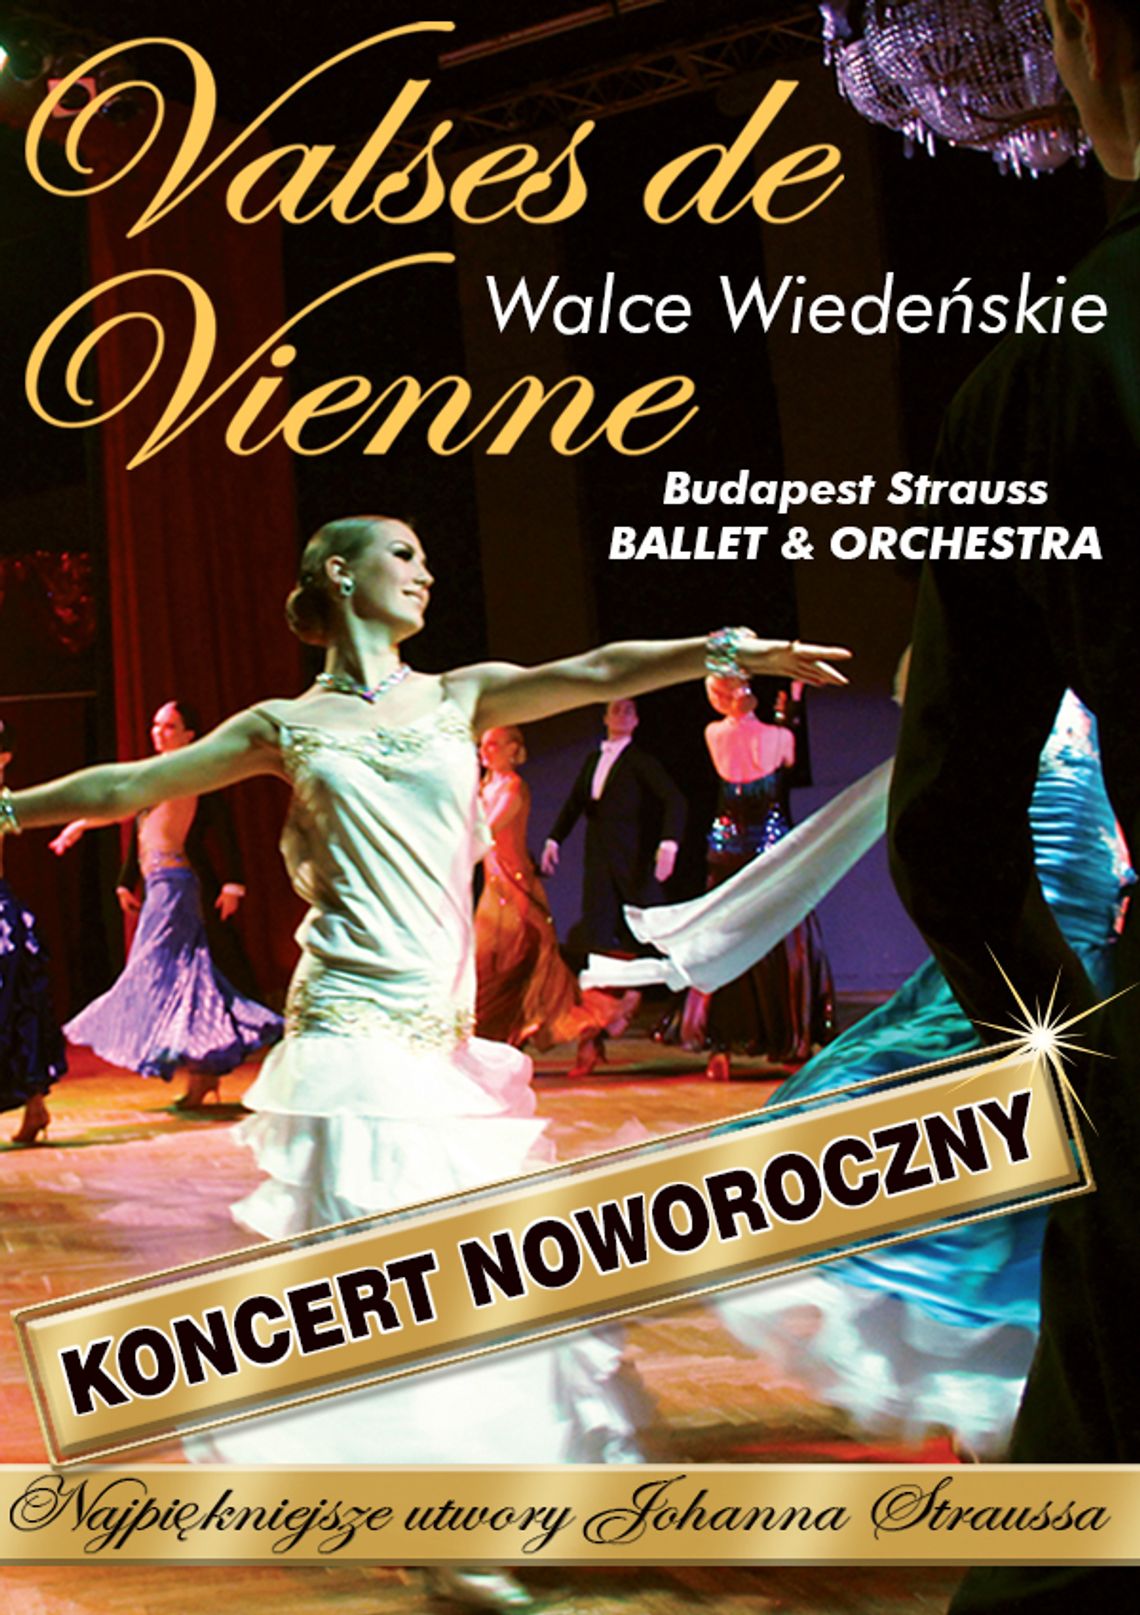 Budapest Strauss Orchestra – Valses de Vienne – KONCERT NOWOROCZNY